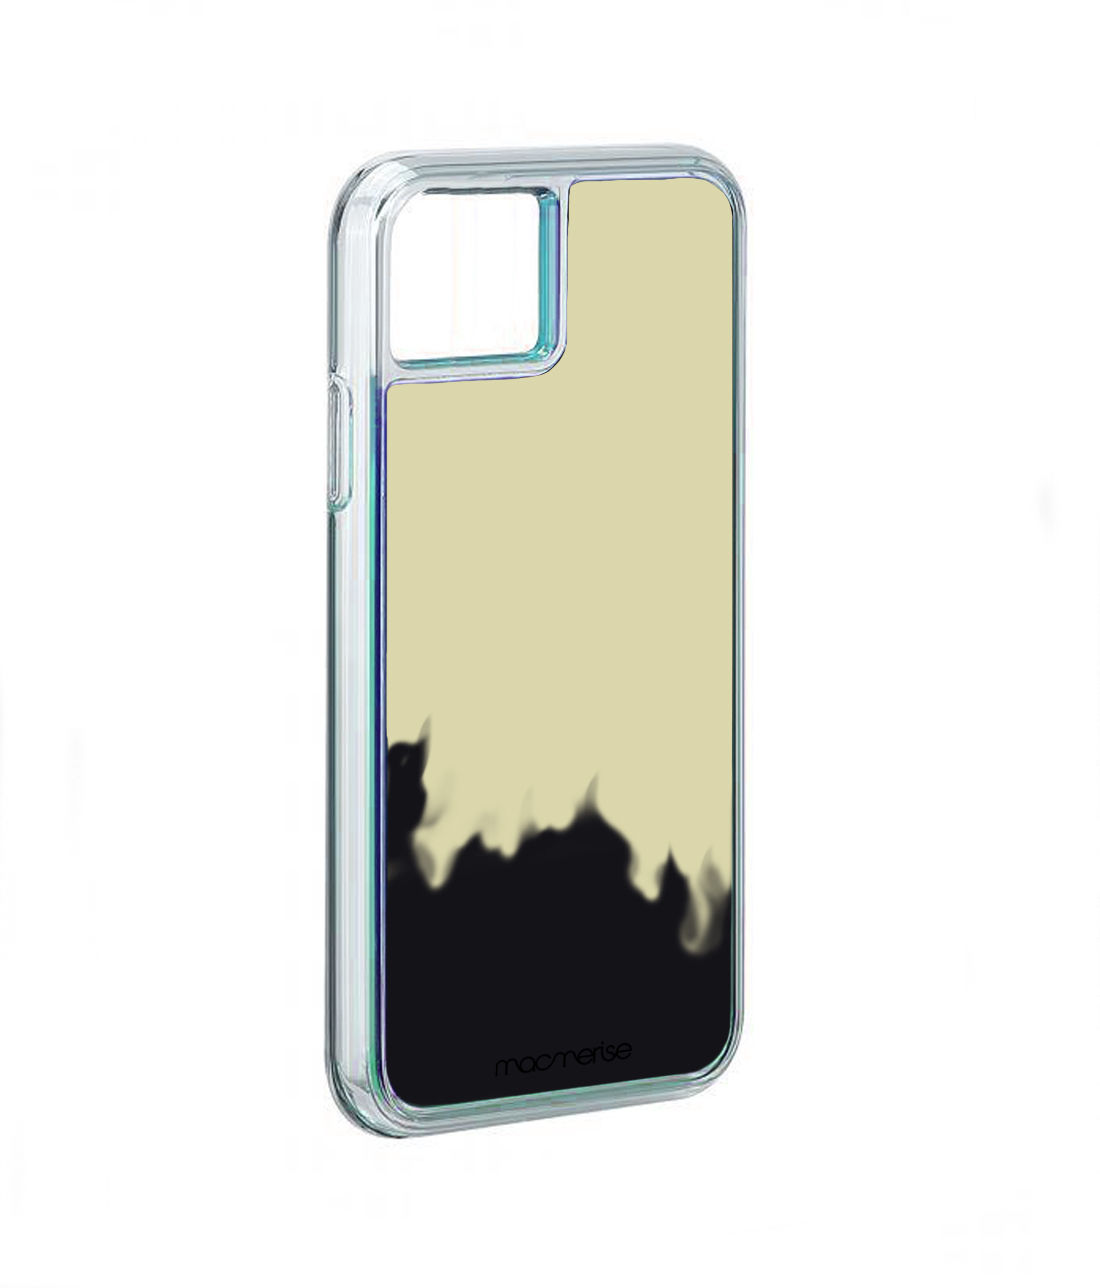 Neon Sand Black - Neon Sand Case for iPhone 12 Mini